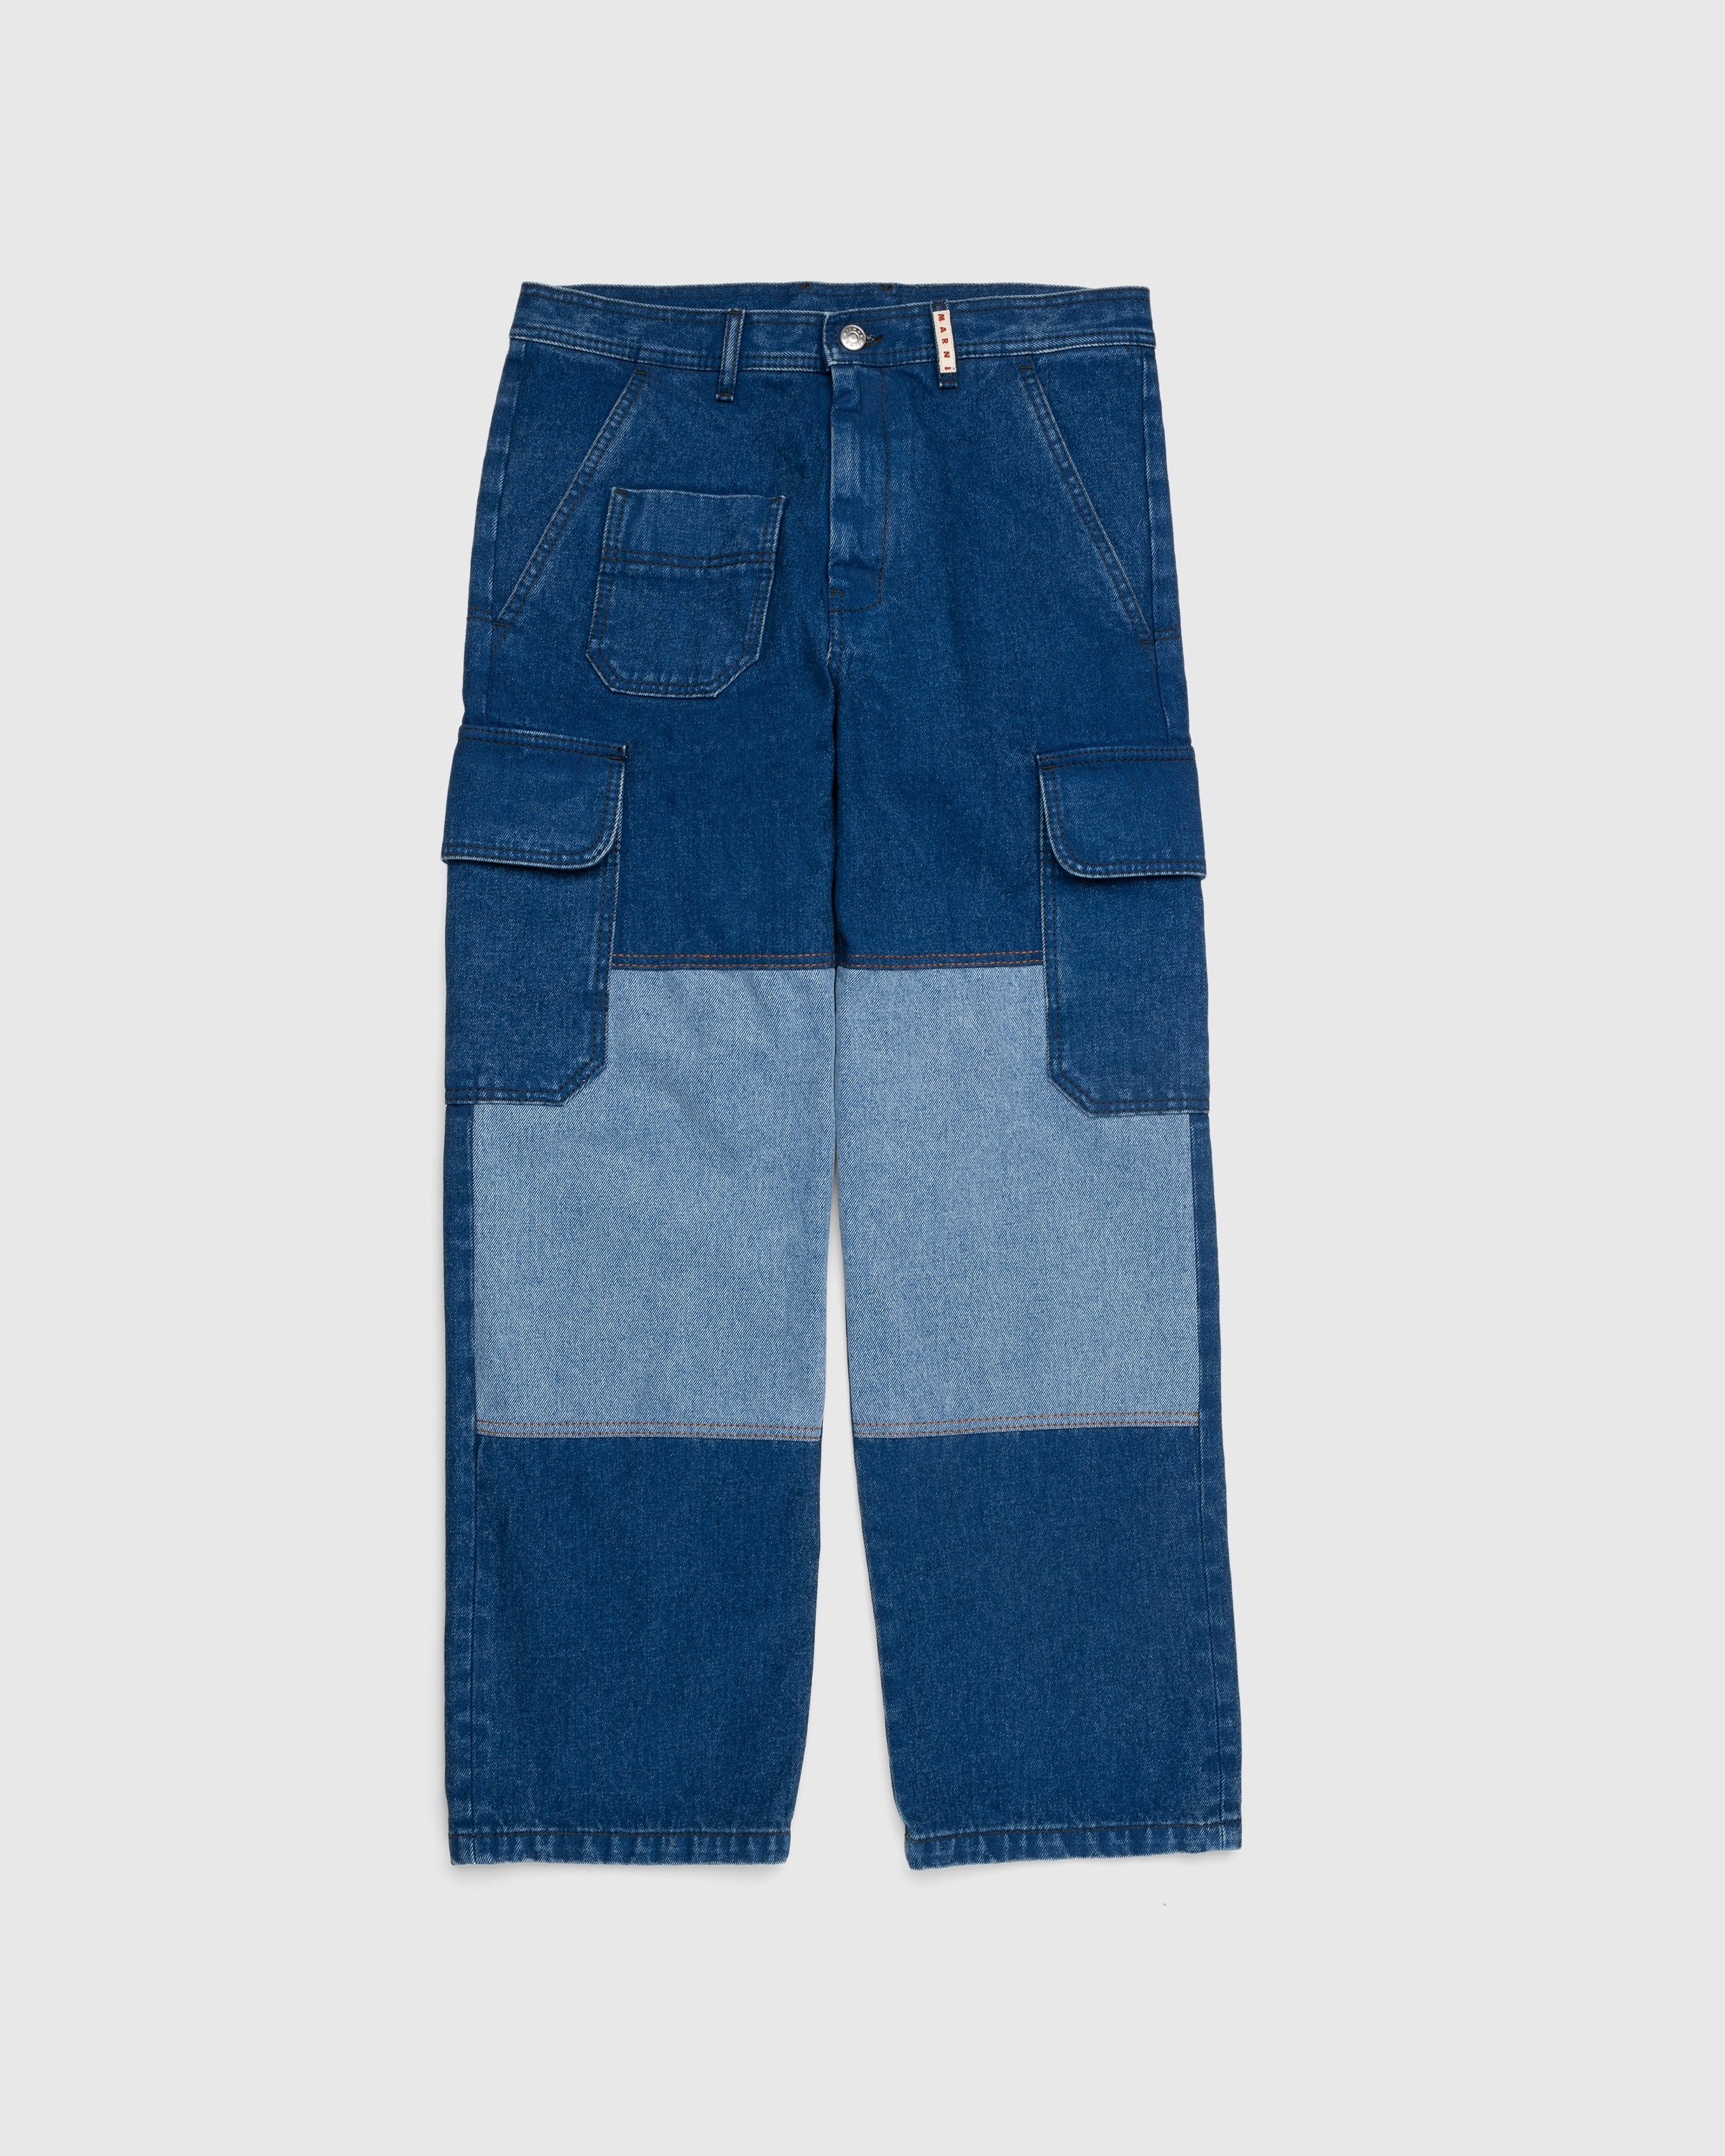 Marni – Denim Cargo Pants Blue - Cargo Pants - Blue - Image 1